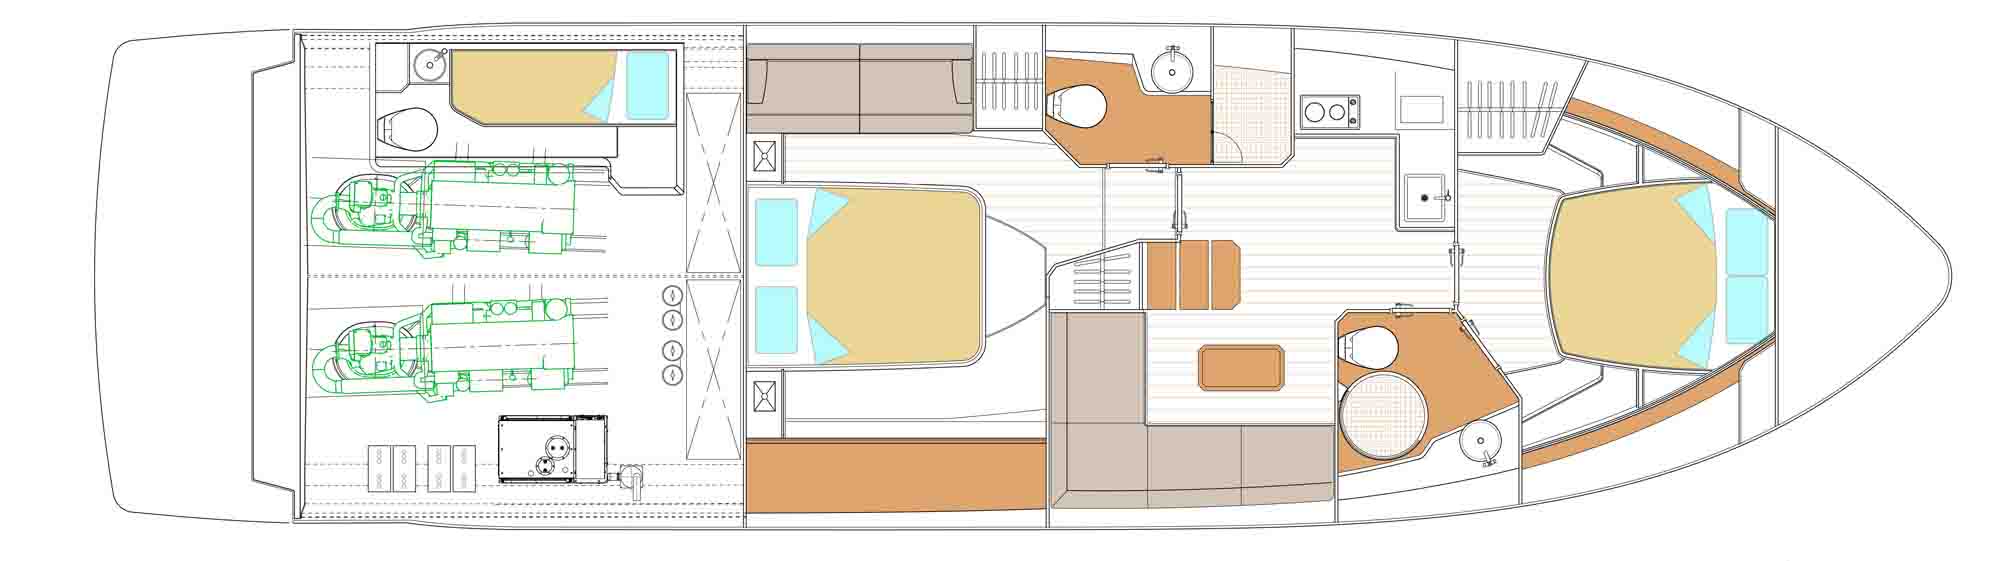 Lower Deck - Option 1